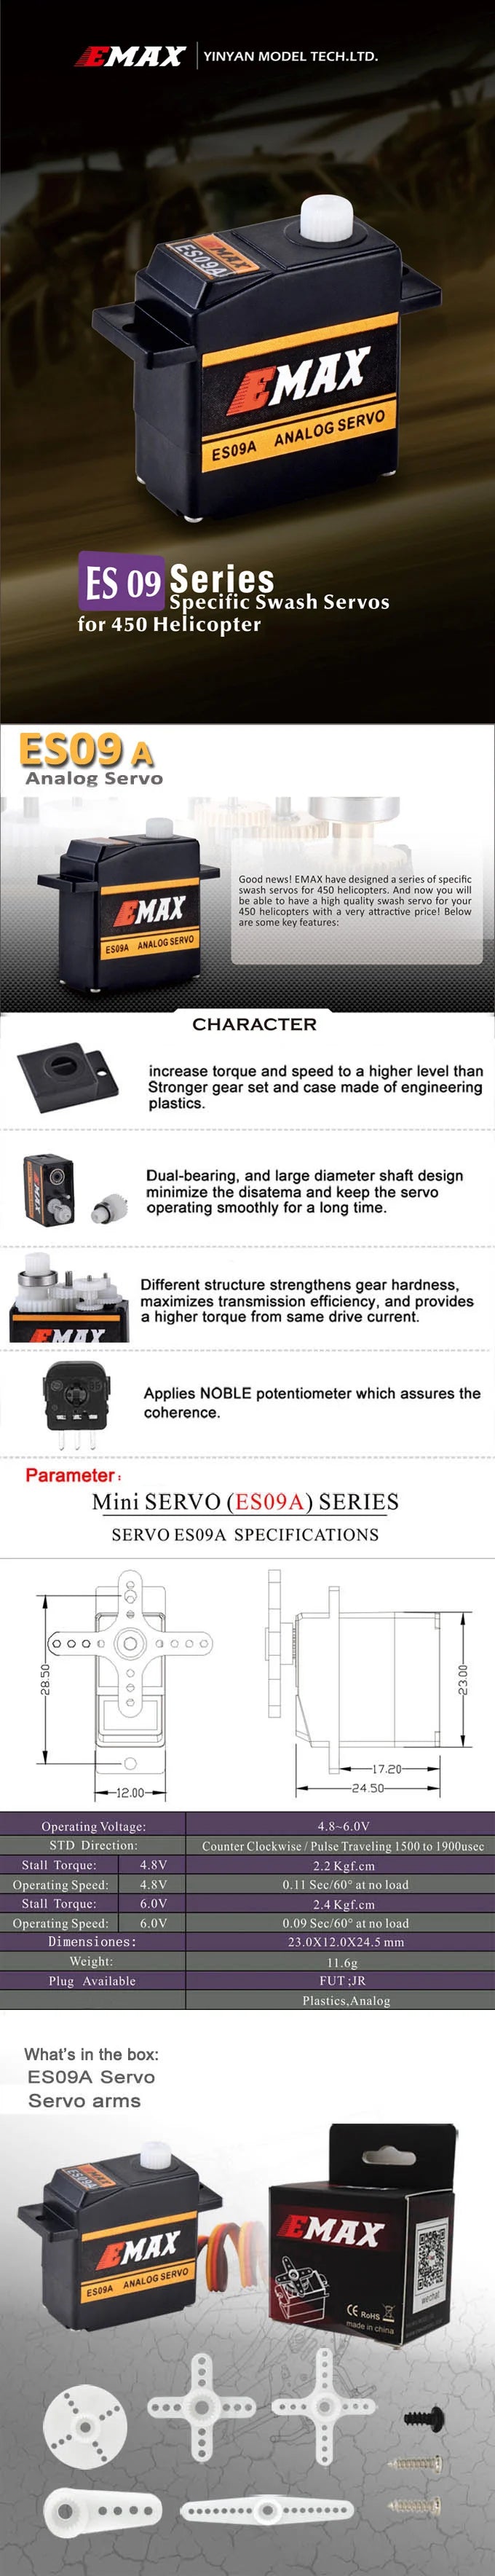 EMAX ES09A Servo, EMAX have designed series of specific swash servos for 450